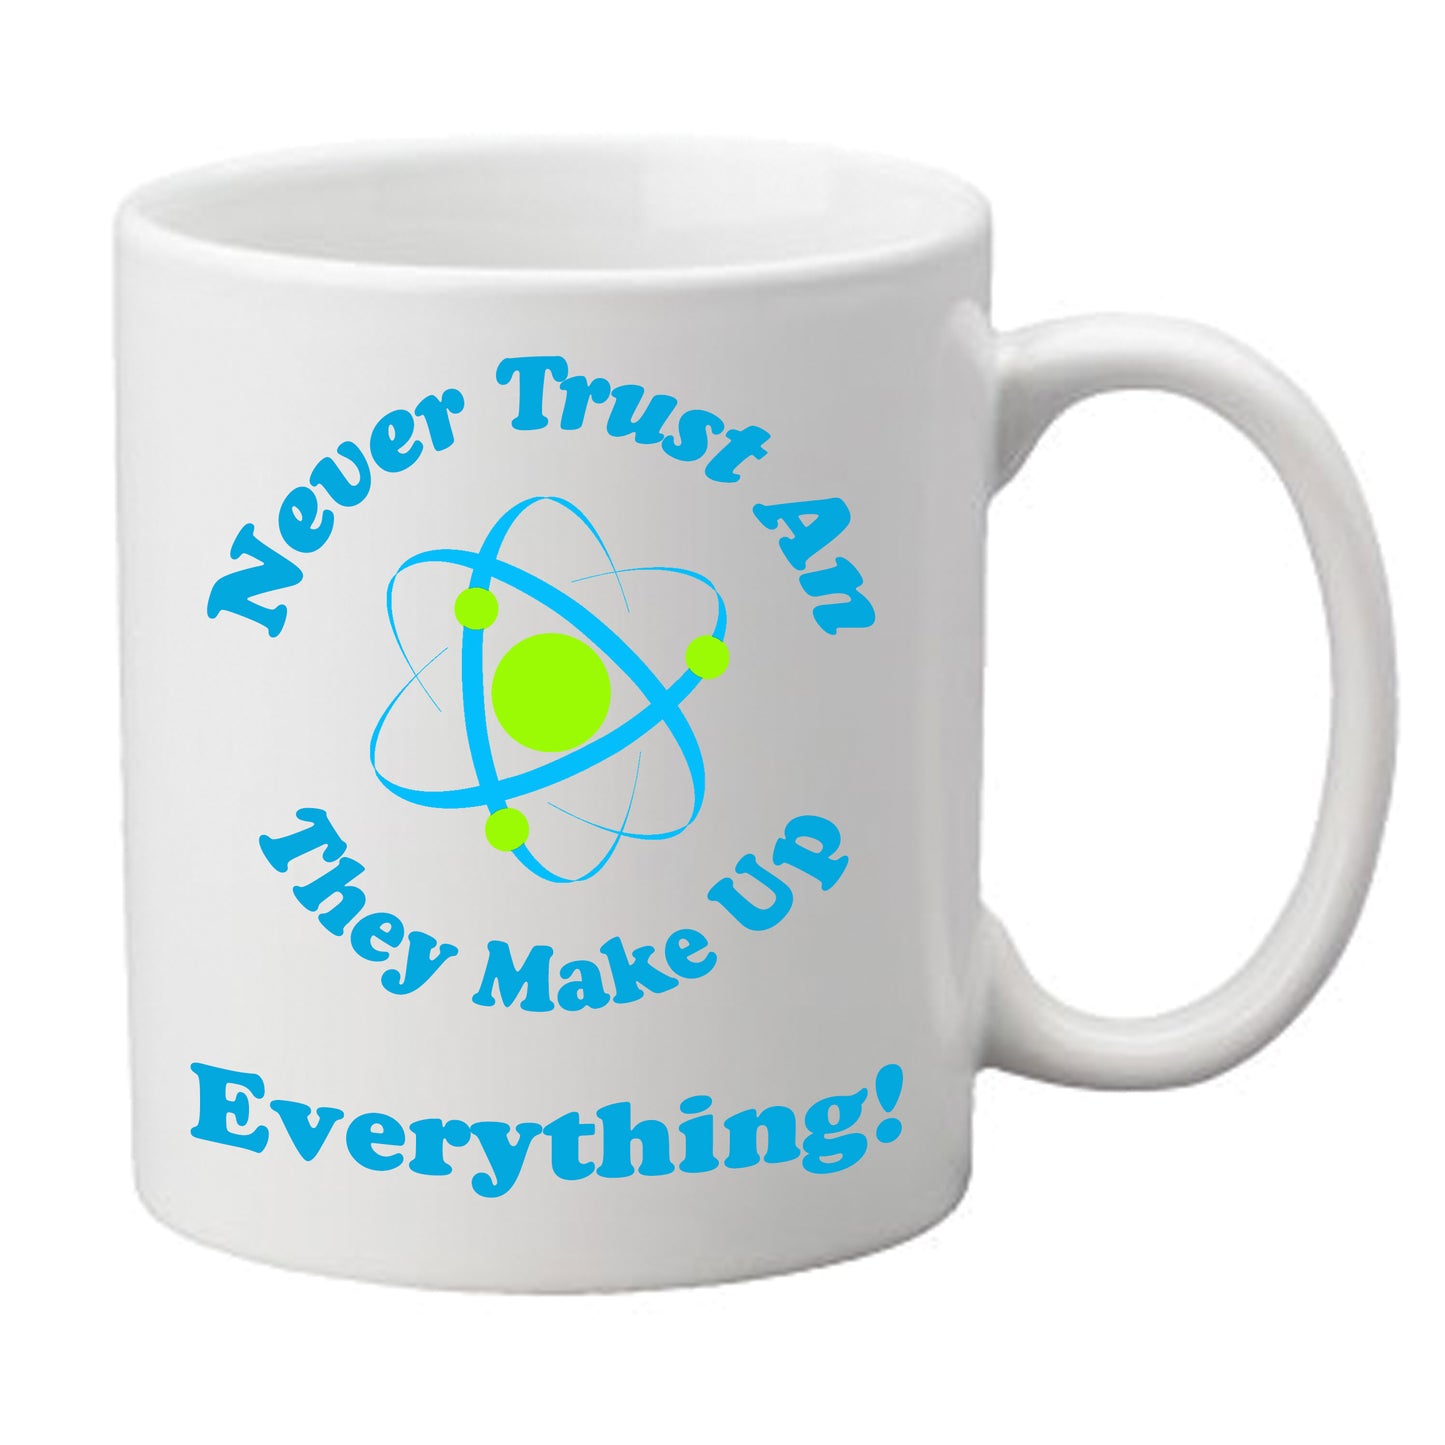 'Never Trust an Atom' Mug